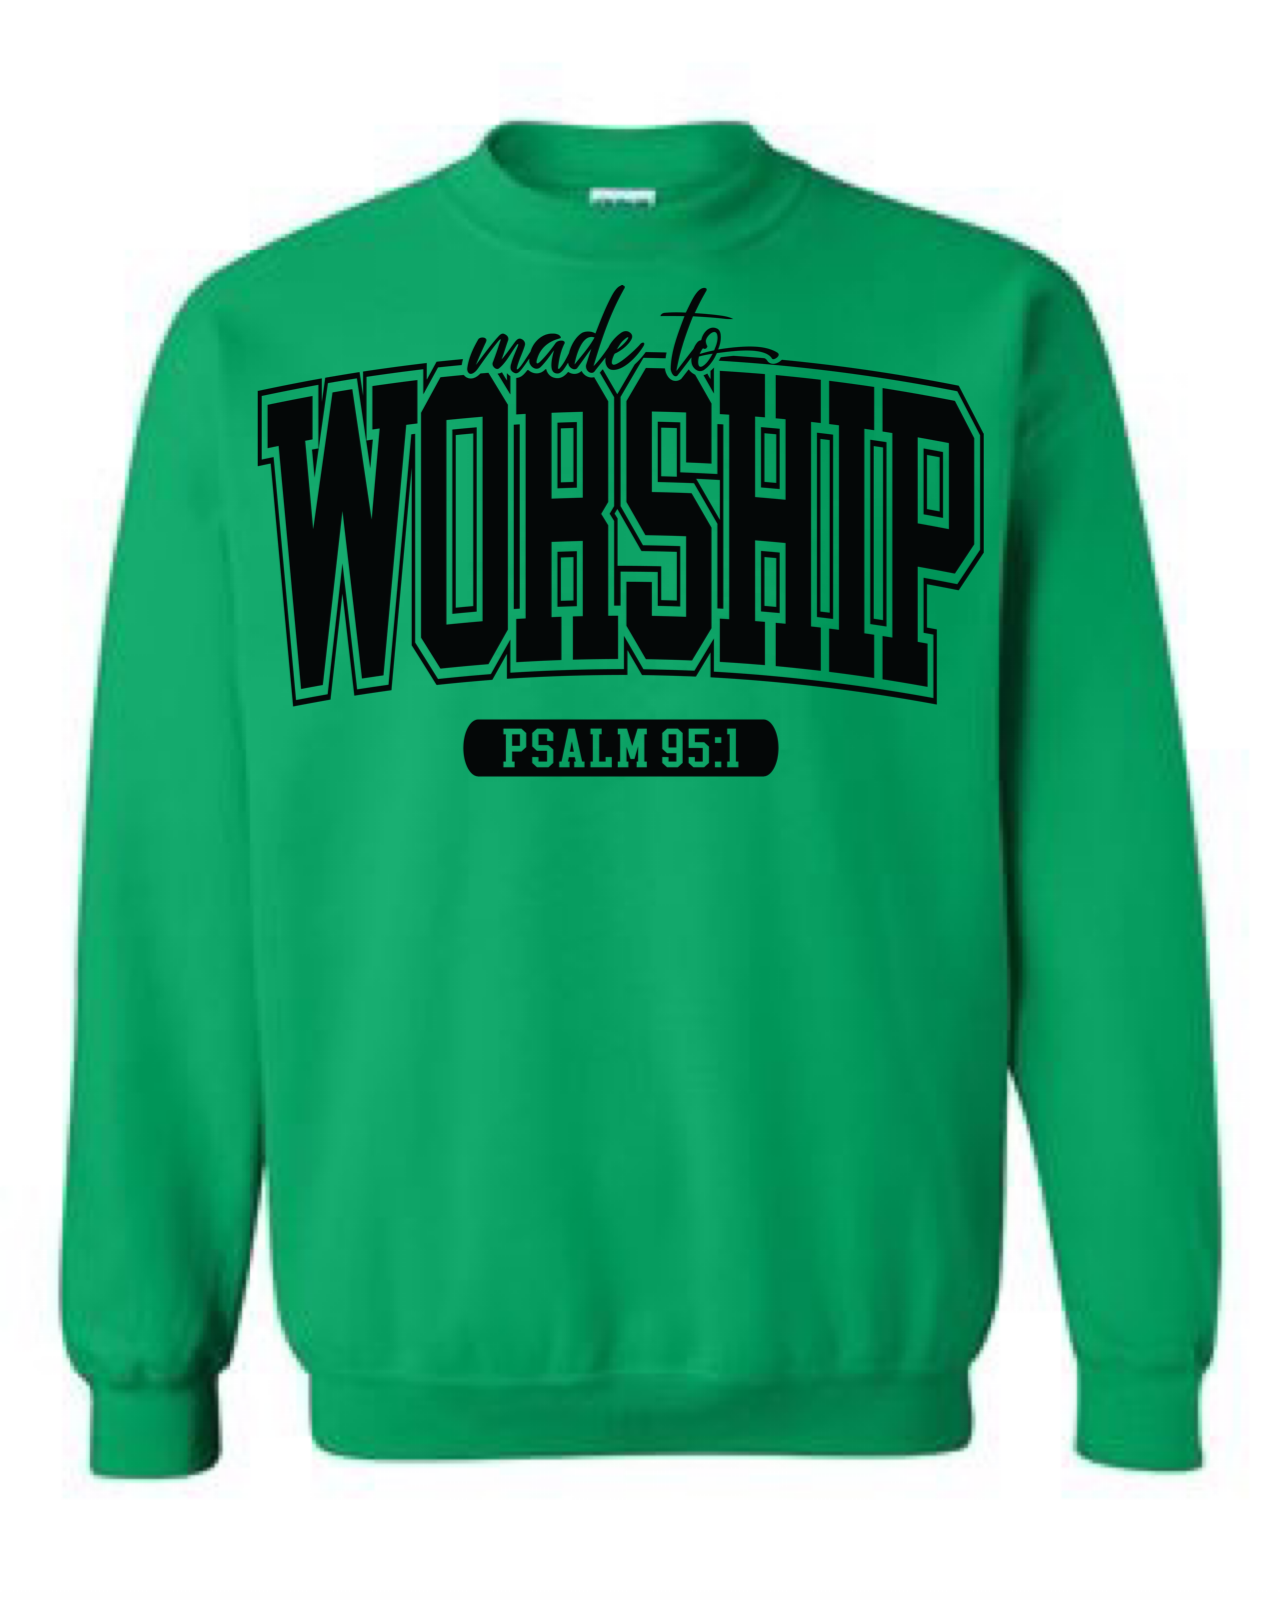 Made To Worship Crewneck Sweatshirt